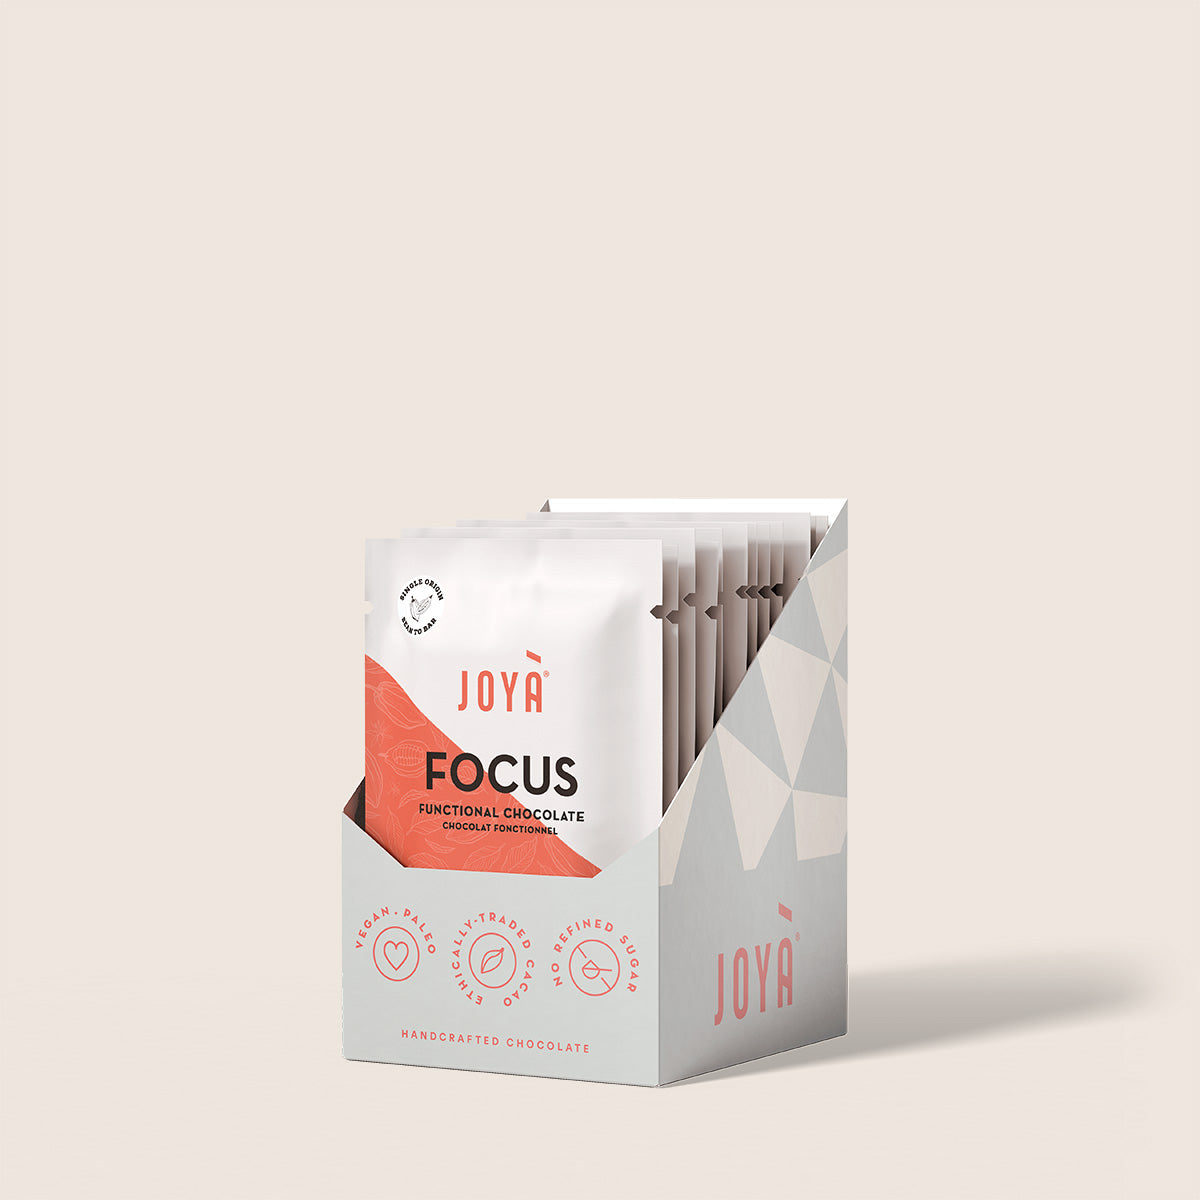 Focus Chocolate Bars in 12 pack box

          